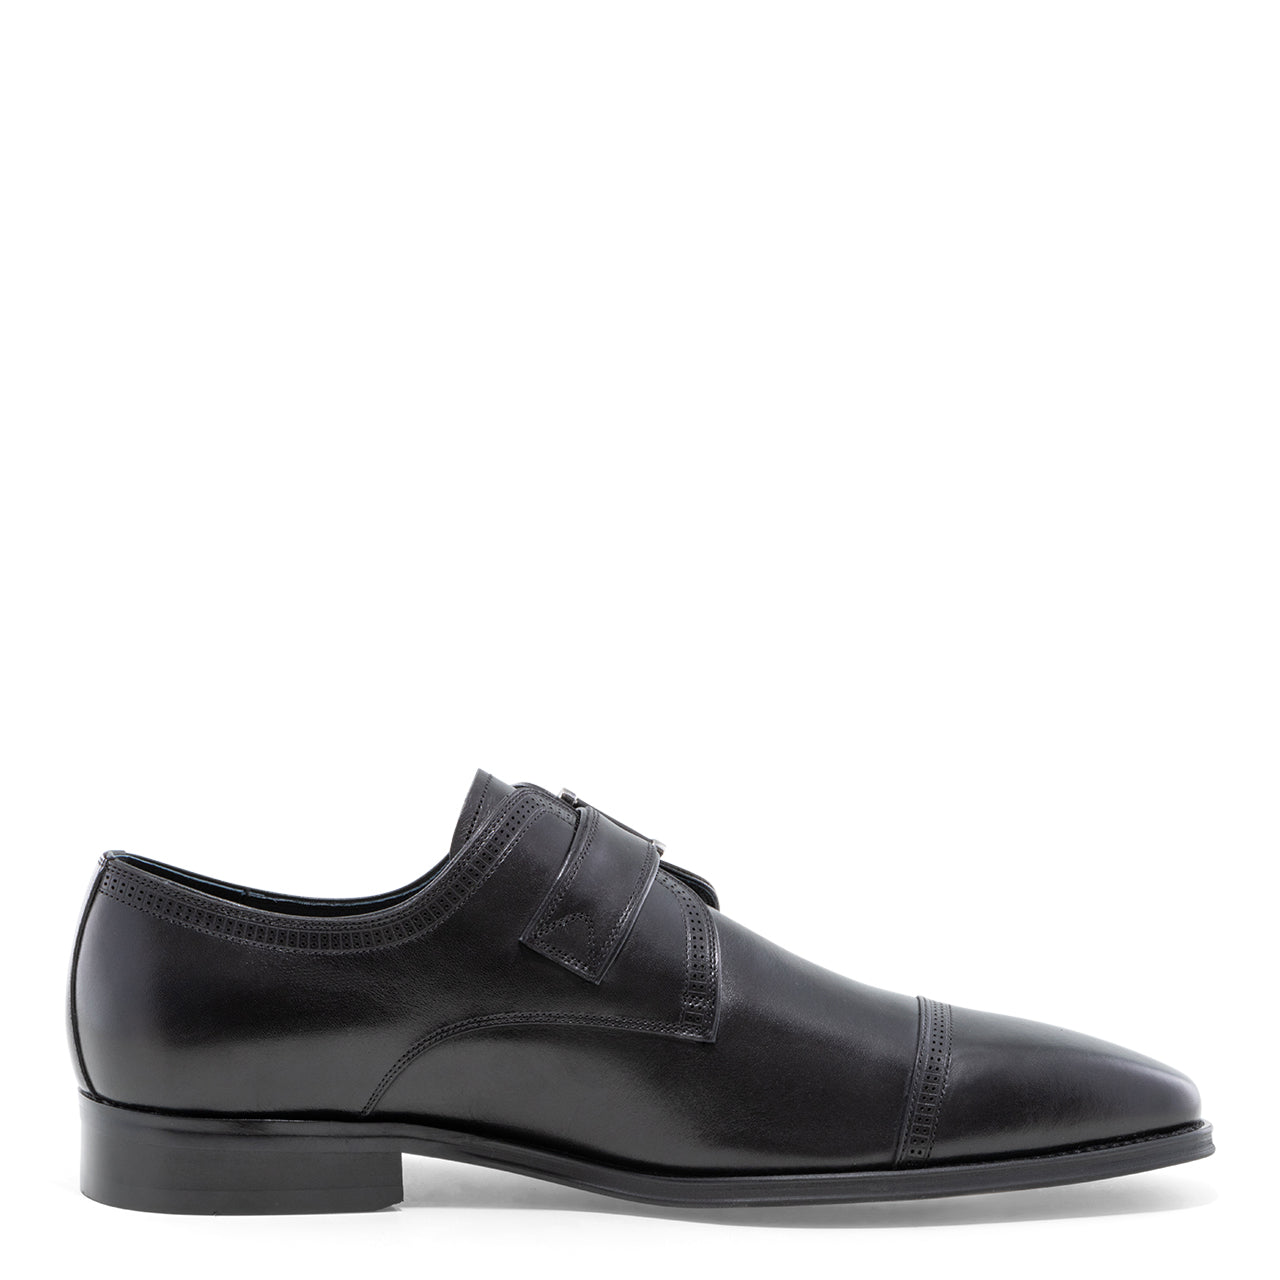 Mcneil - Black Single Monk Strap Oxford Dress Shoes for Men by Jump 5